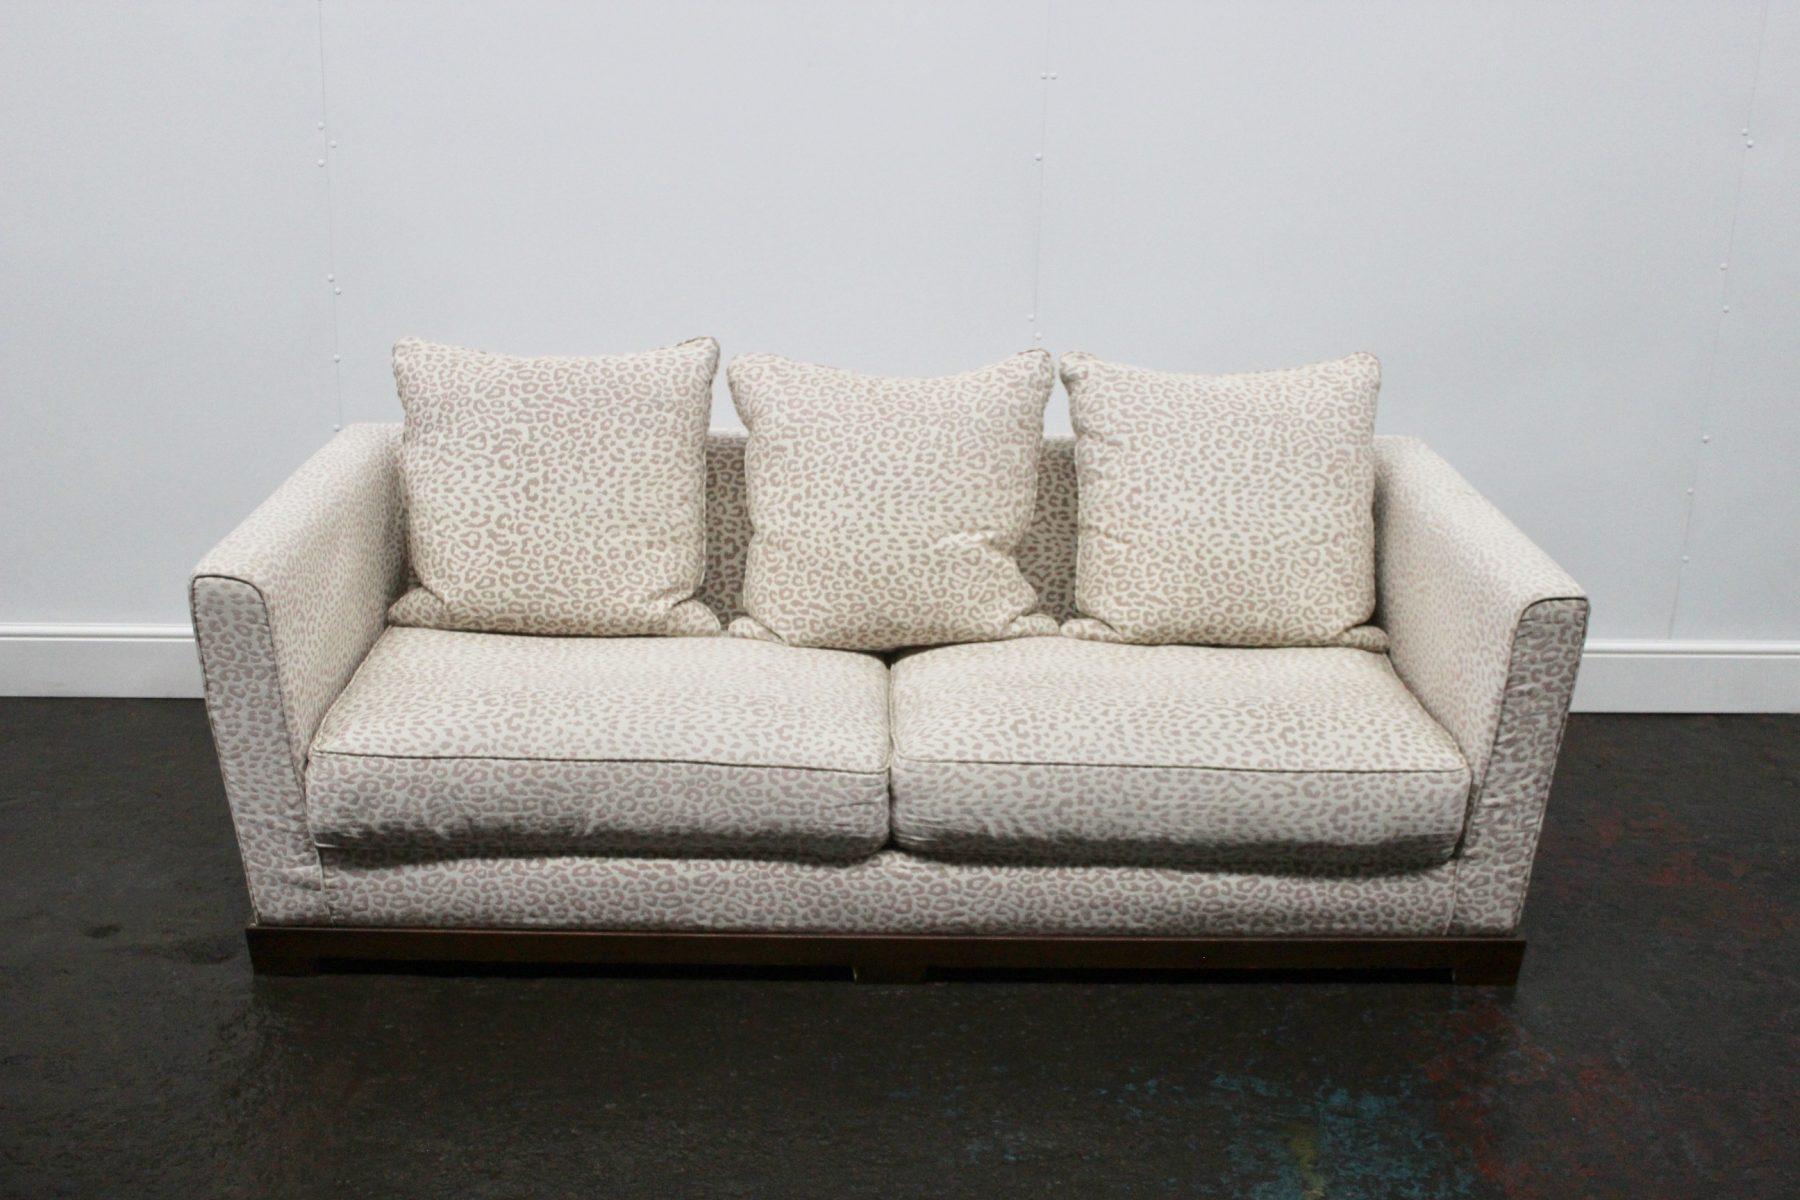 Promemoria “Wanda” 2.5-Seat Sofa in Leopard-Print Fabric In Good Condition For Sale In Barrowford, GB